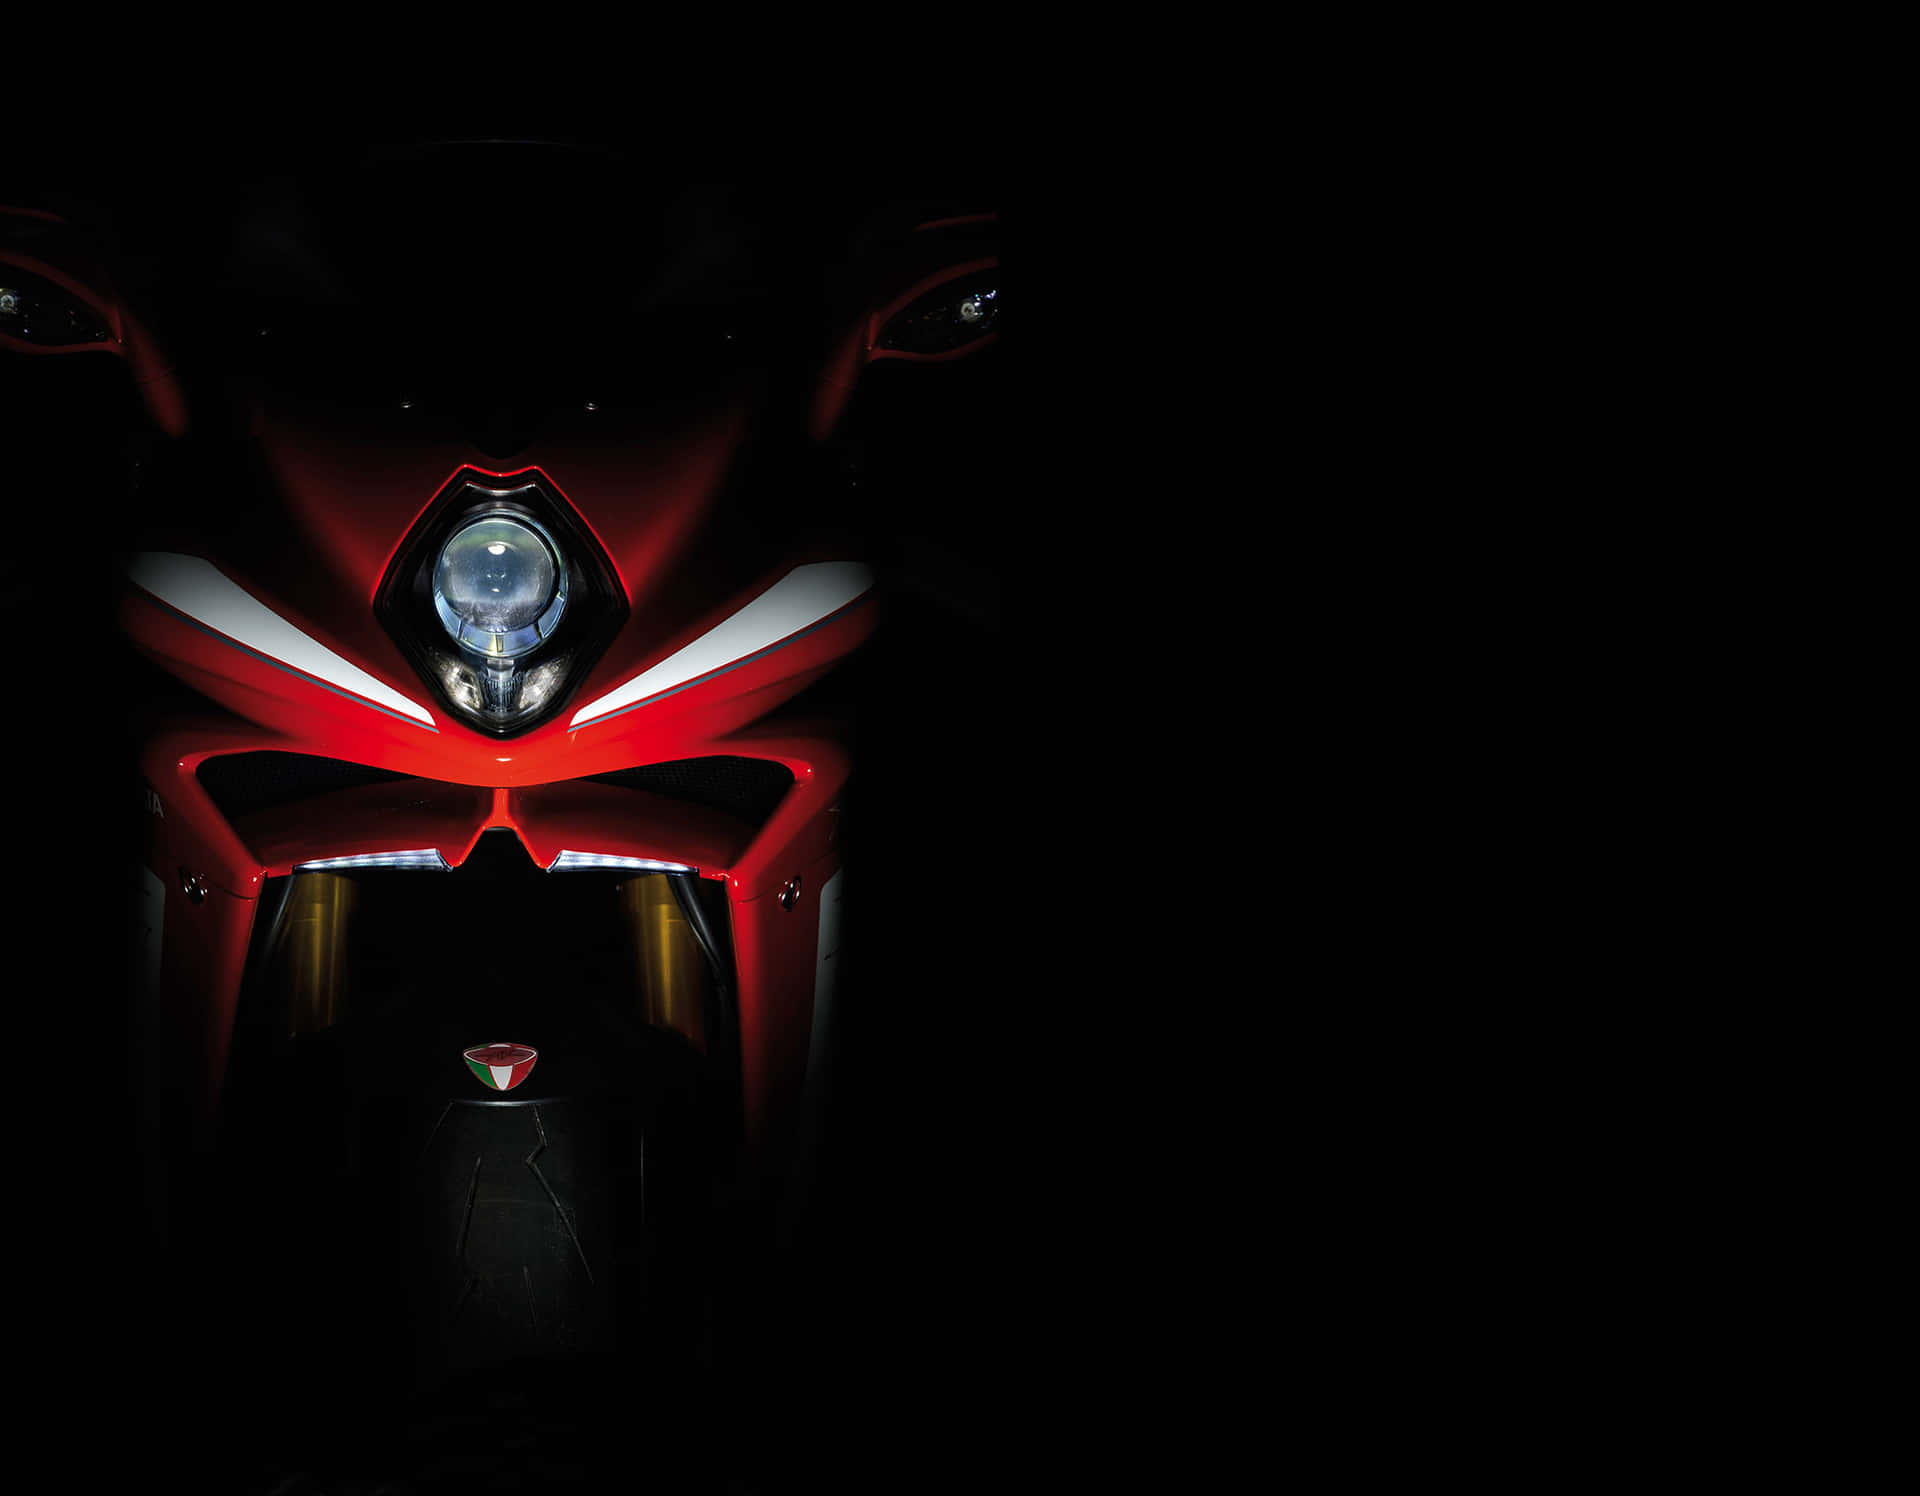 Gleaming Mv Agusta Motorcycle In Spotlight Wallpaper